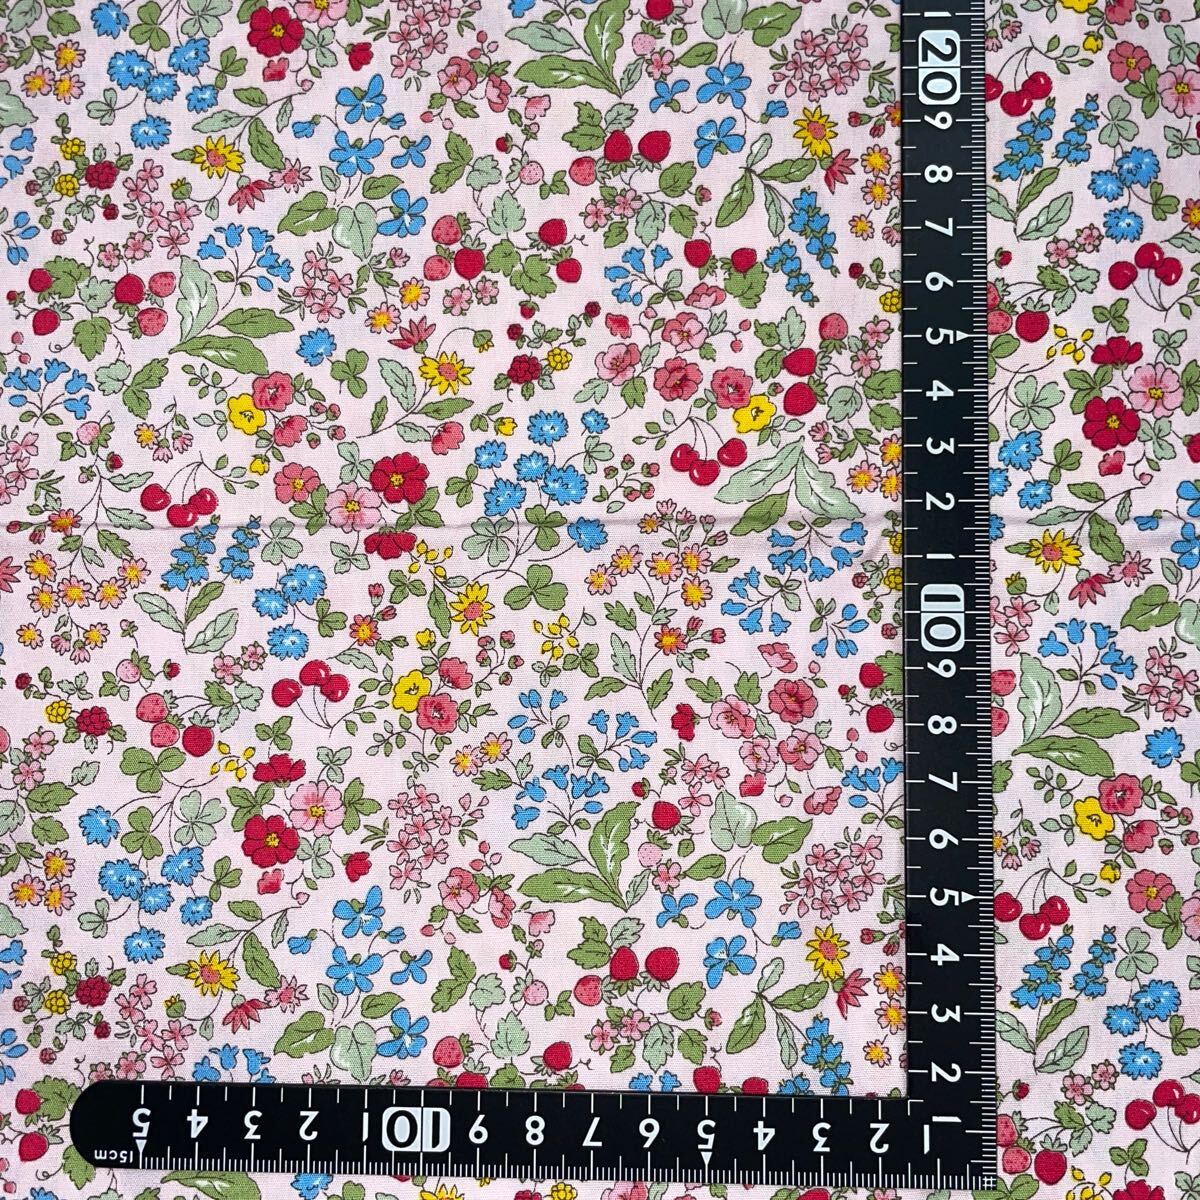 si- chin g cloth flap unused 110.×100. floral print 